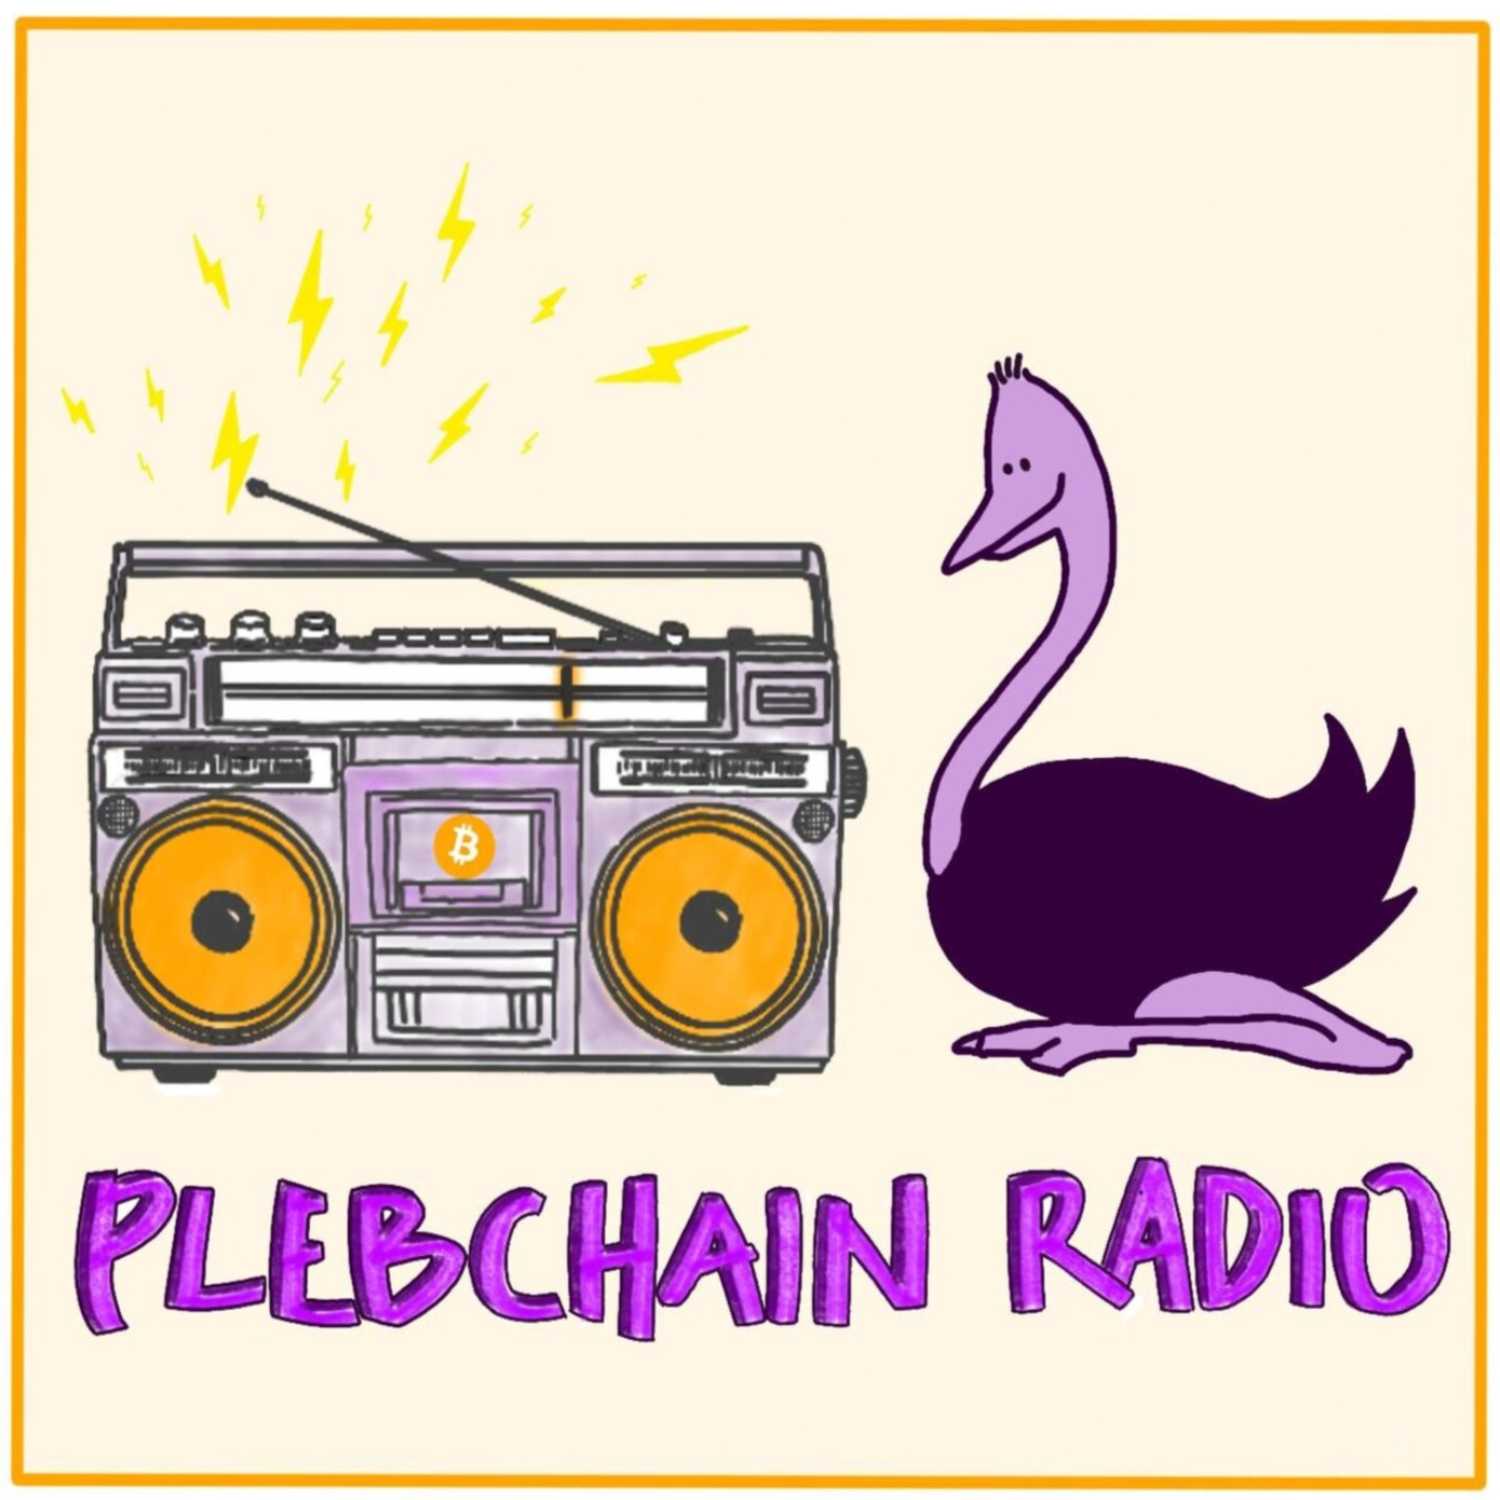 Plebchain Radio